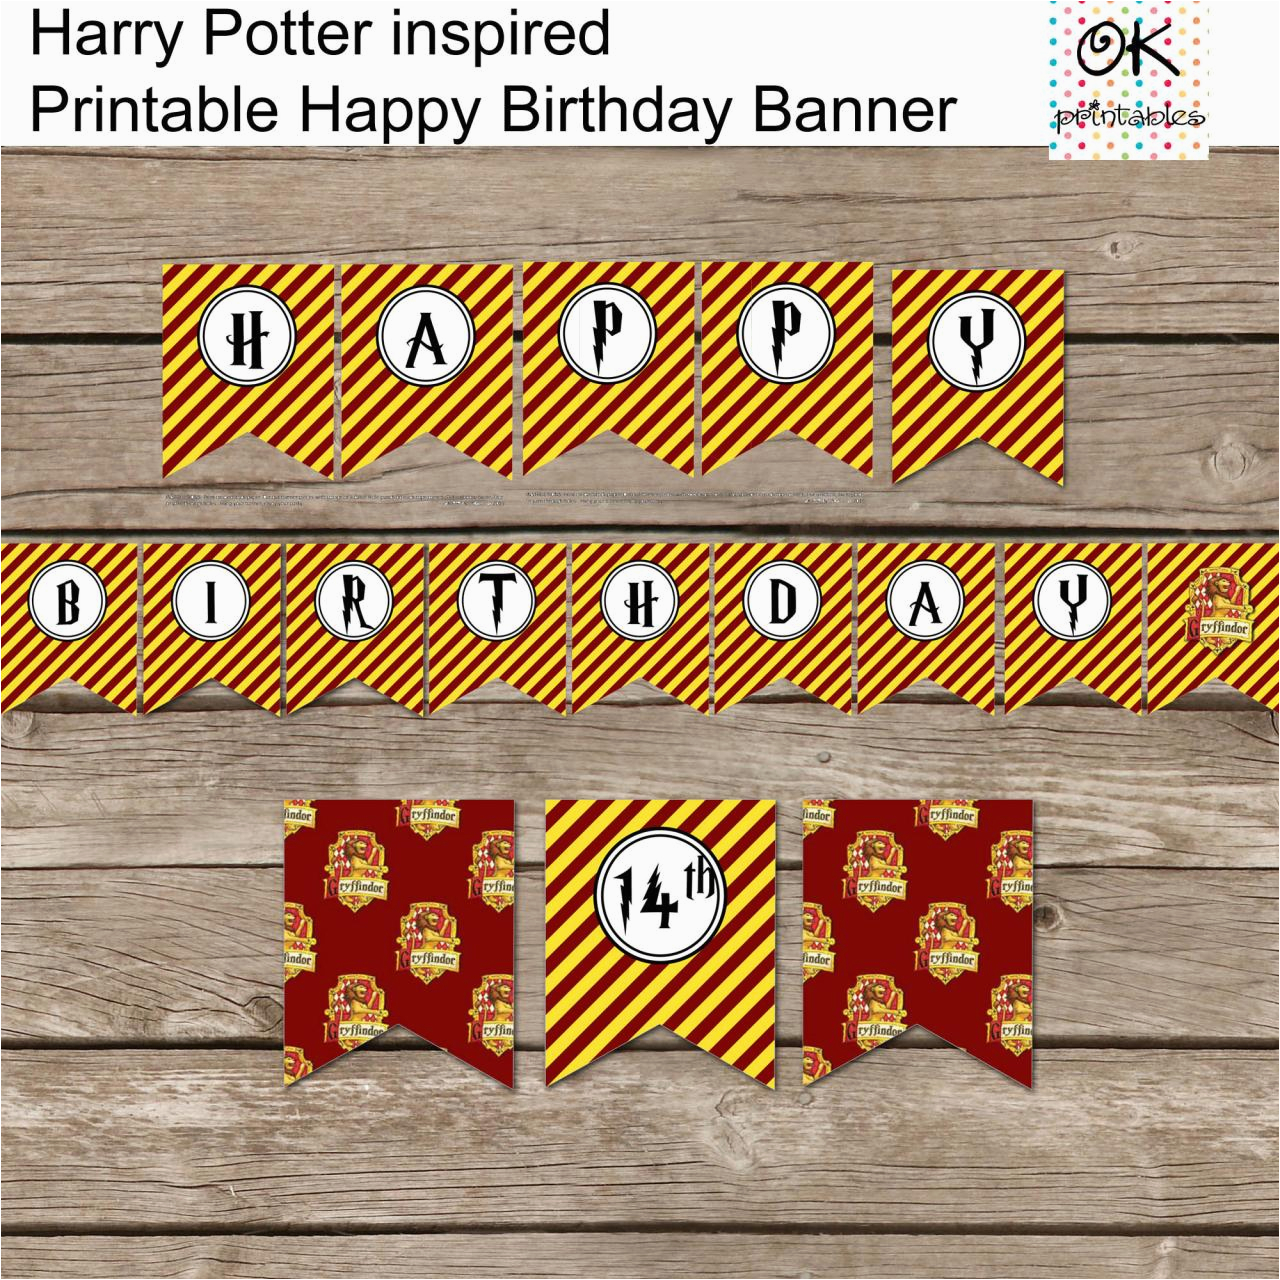 Happy Birthday Banner Harry Potter Printable Harry Potter Inspired Happy Birthday Banner Diy Harry